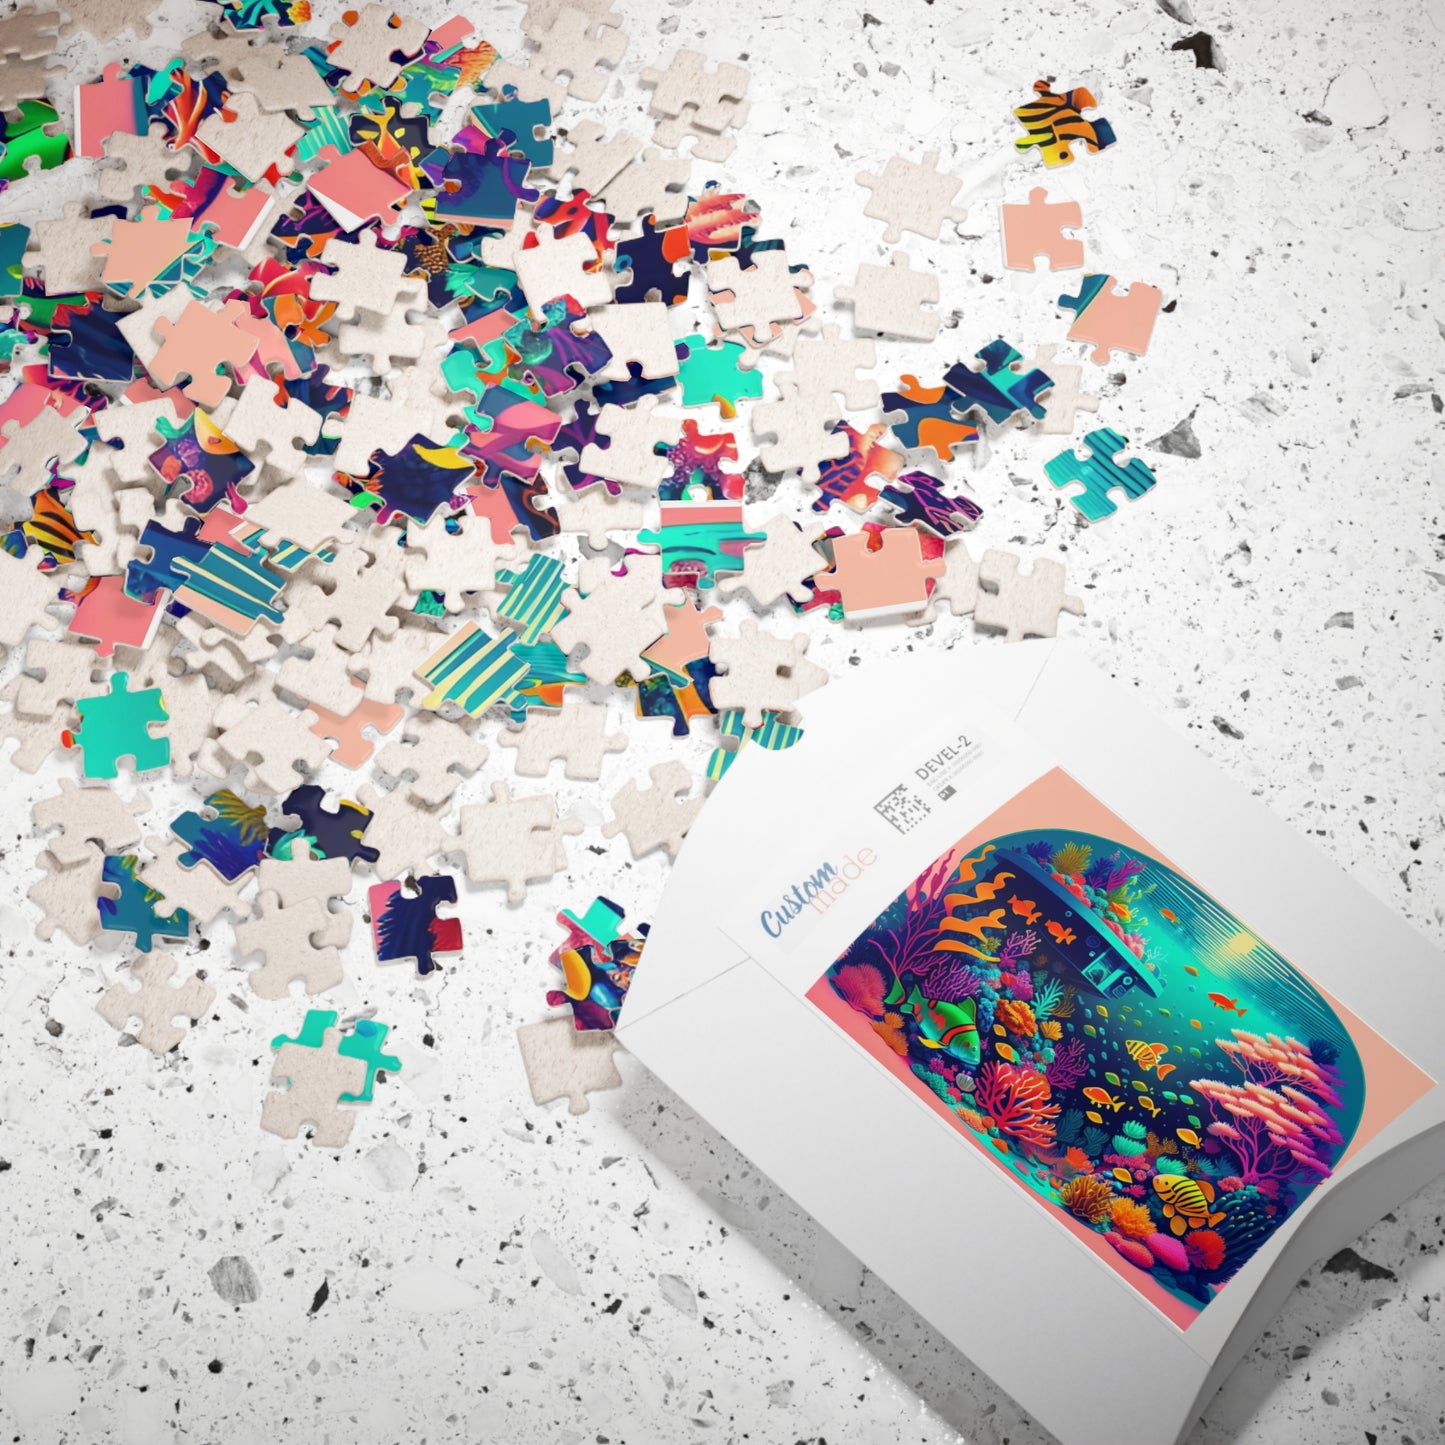 Kid’s Colorful Sea Puzzle, 110-Piece